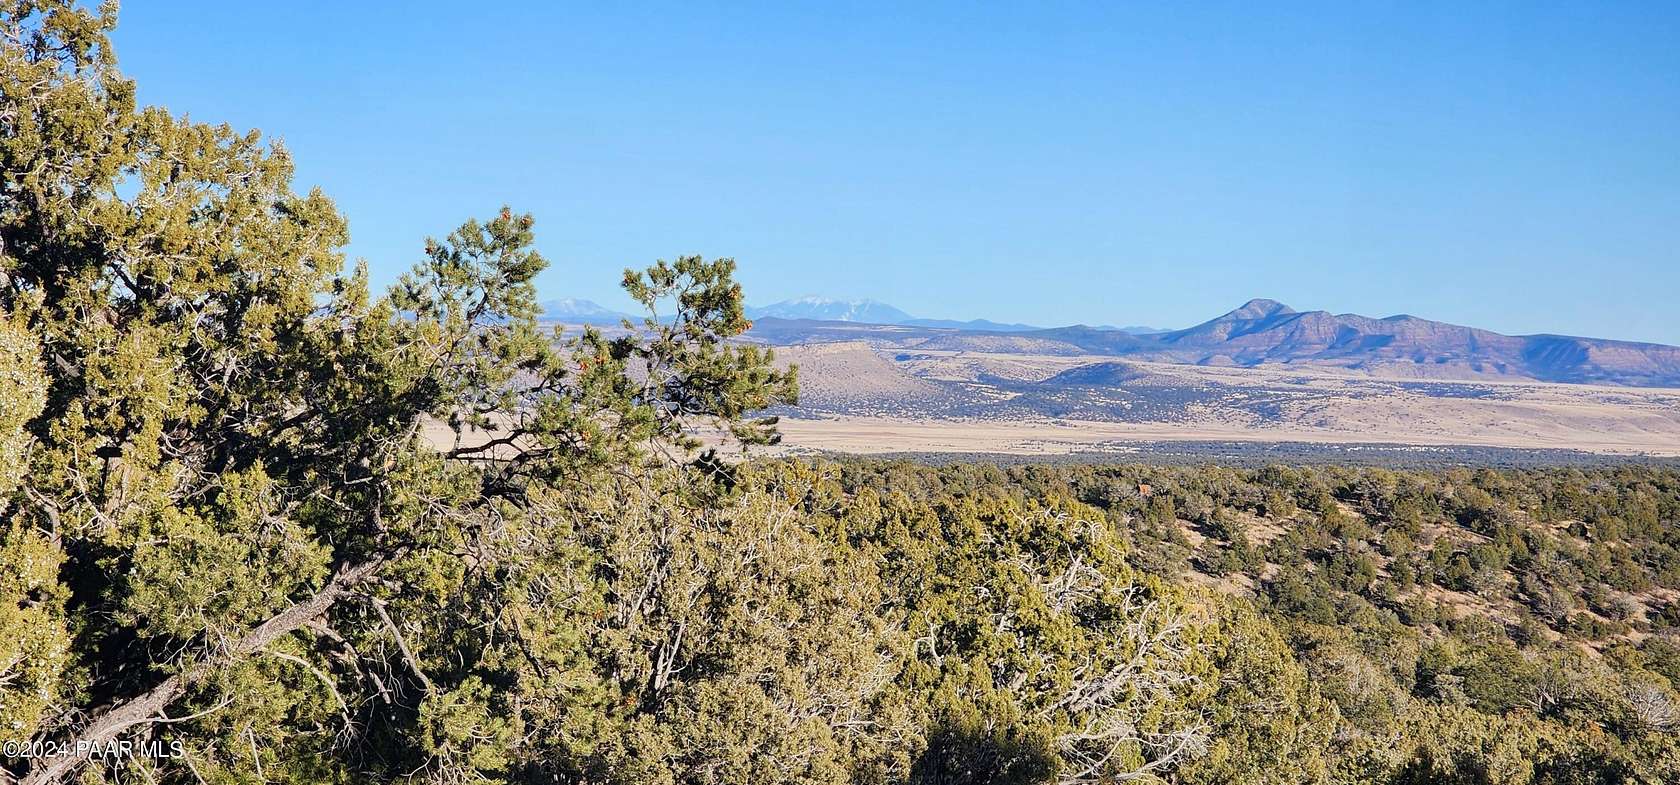 38 Acres of Recreational Land & Farm for Sale in Seligman, Arizona